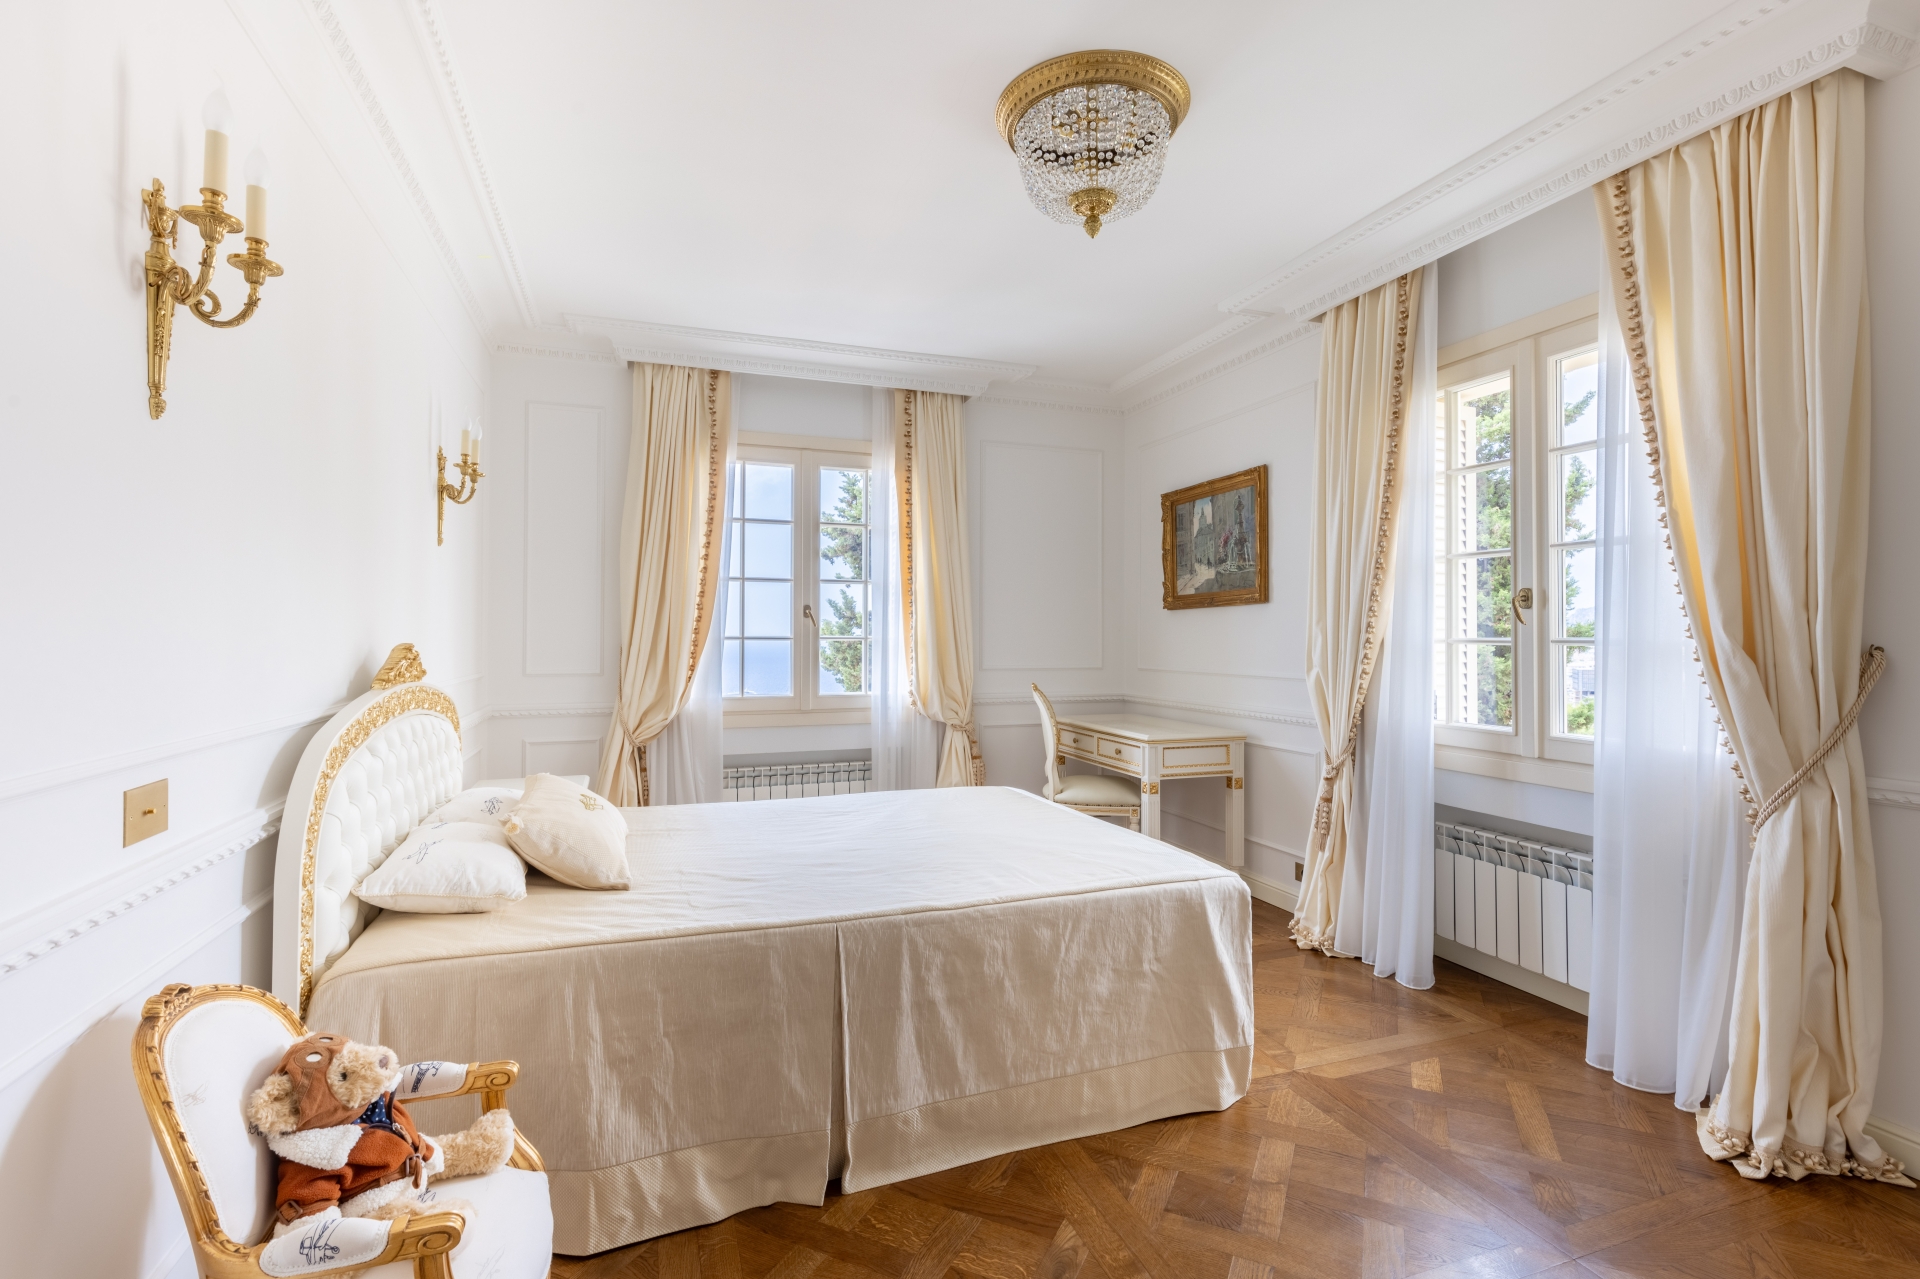 Dotta Appartement de 5 pieces a vendre - VILLA POULIDO - Roquebrune-Cap-Martin - img6